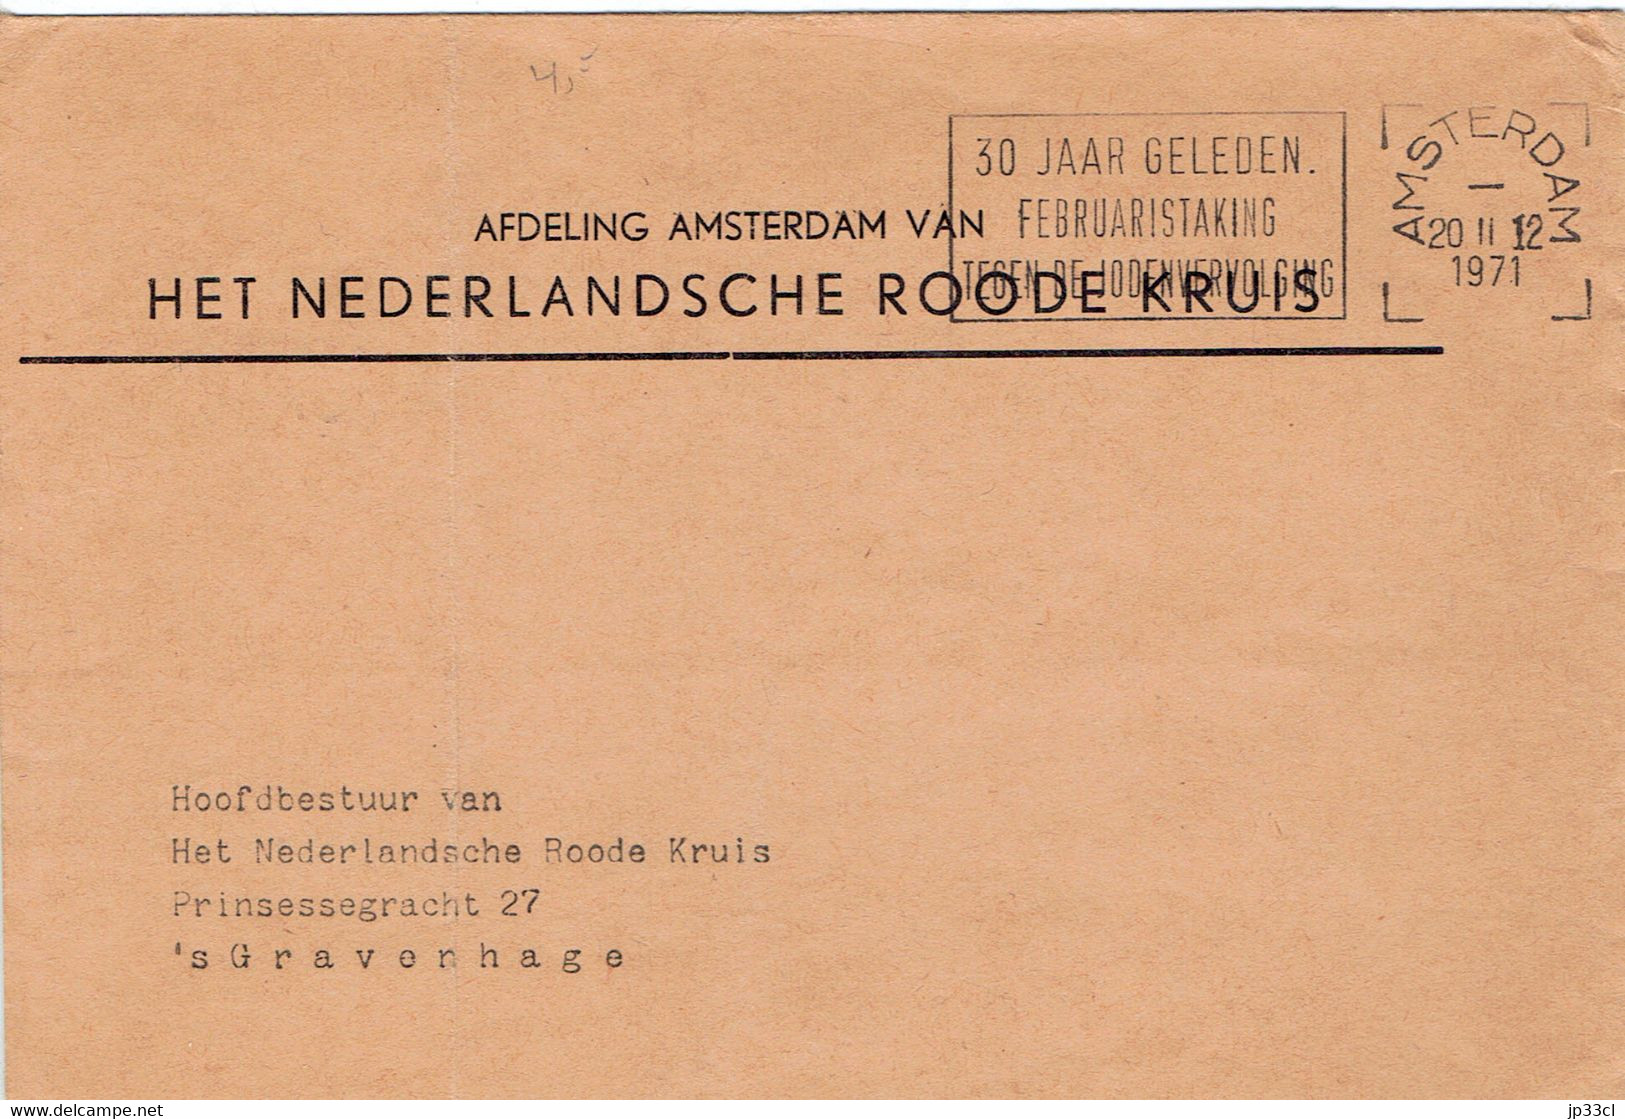 Judaïsme Croix Rouge Rode Kruis Stempel 30 Jaar Geleden Februaristaking Tegen De Jodenvervolging, Amsterdam 20/2/1971 - Maschinenstempel (EMA)